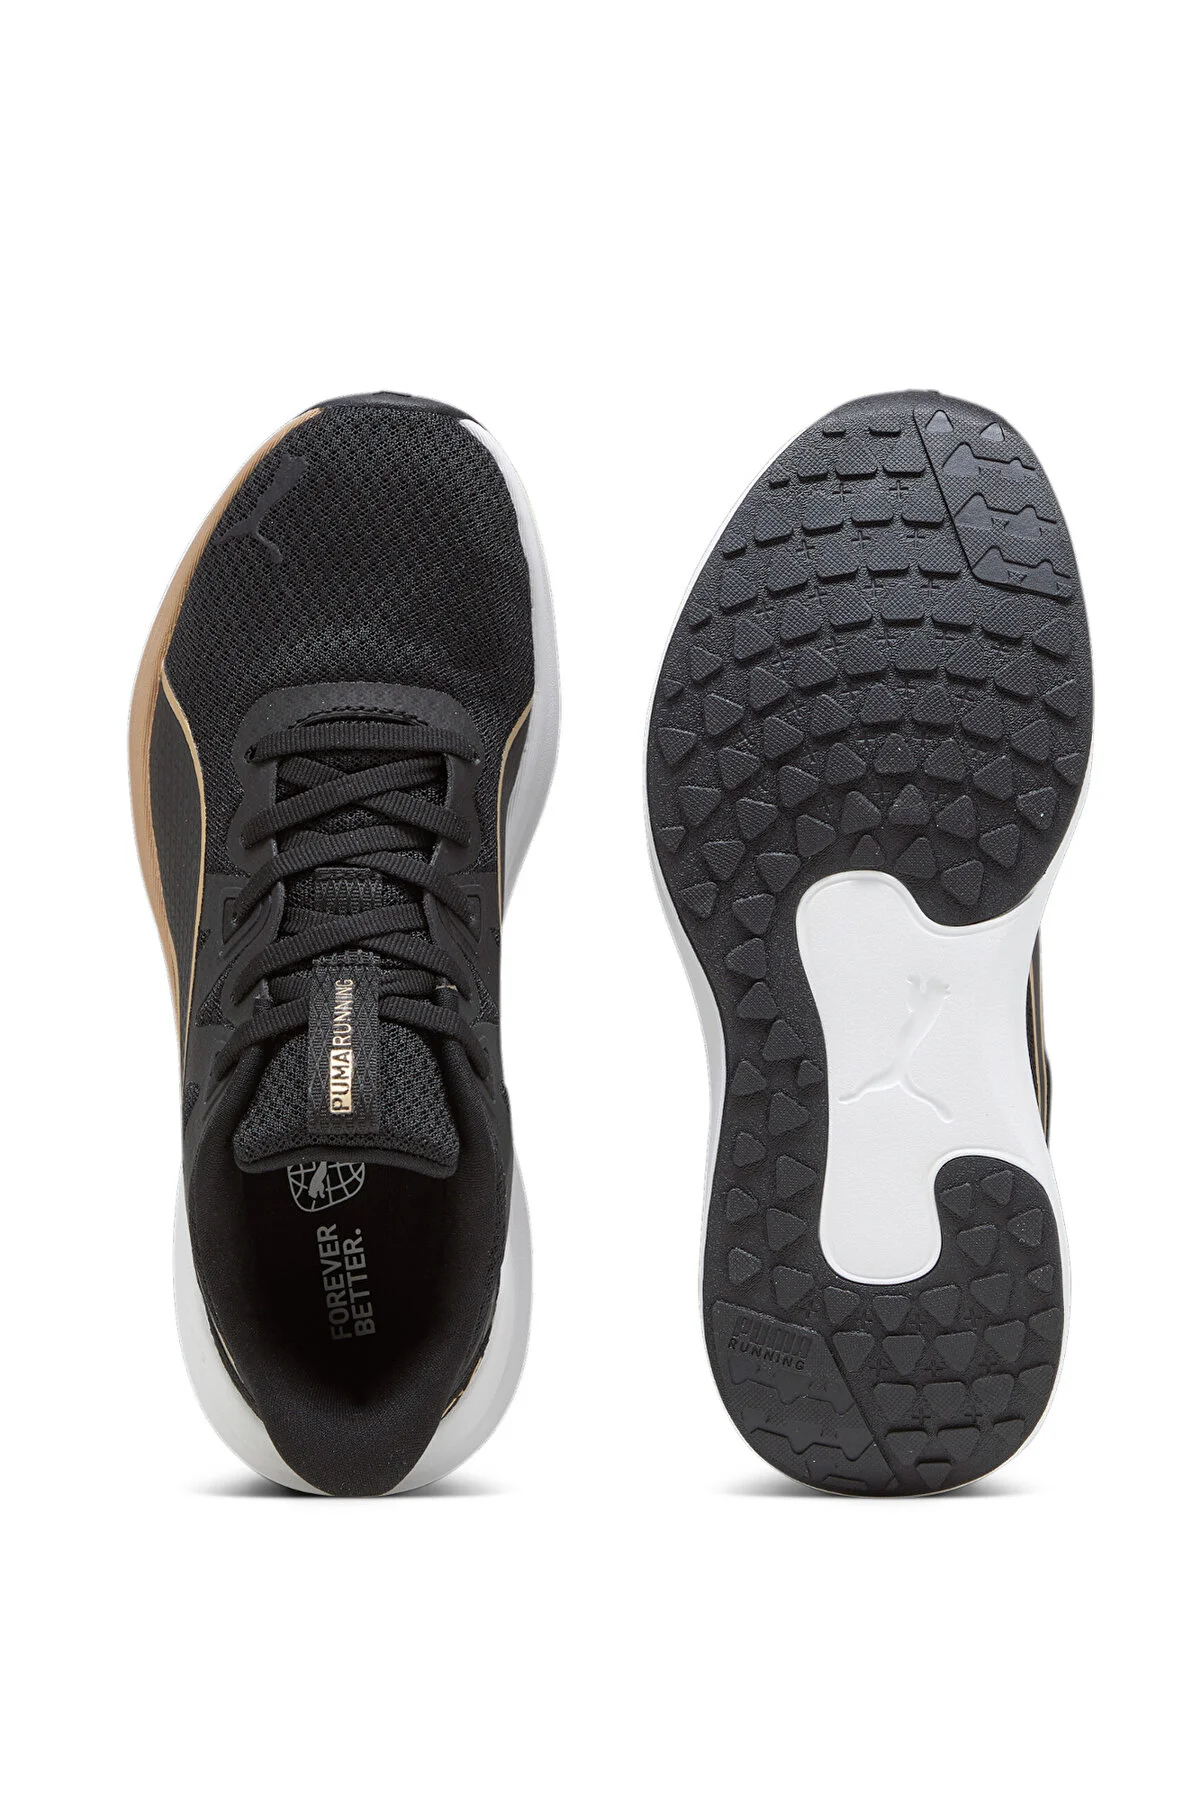 Reflect Lite Molten Metal Wns Kadın Spor Ayakkabı-Siyah